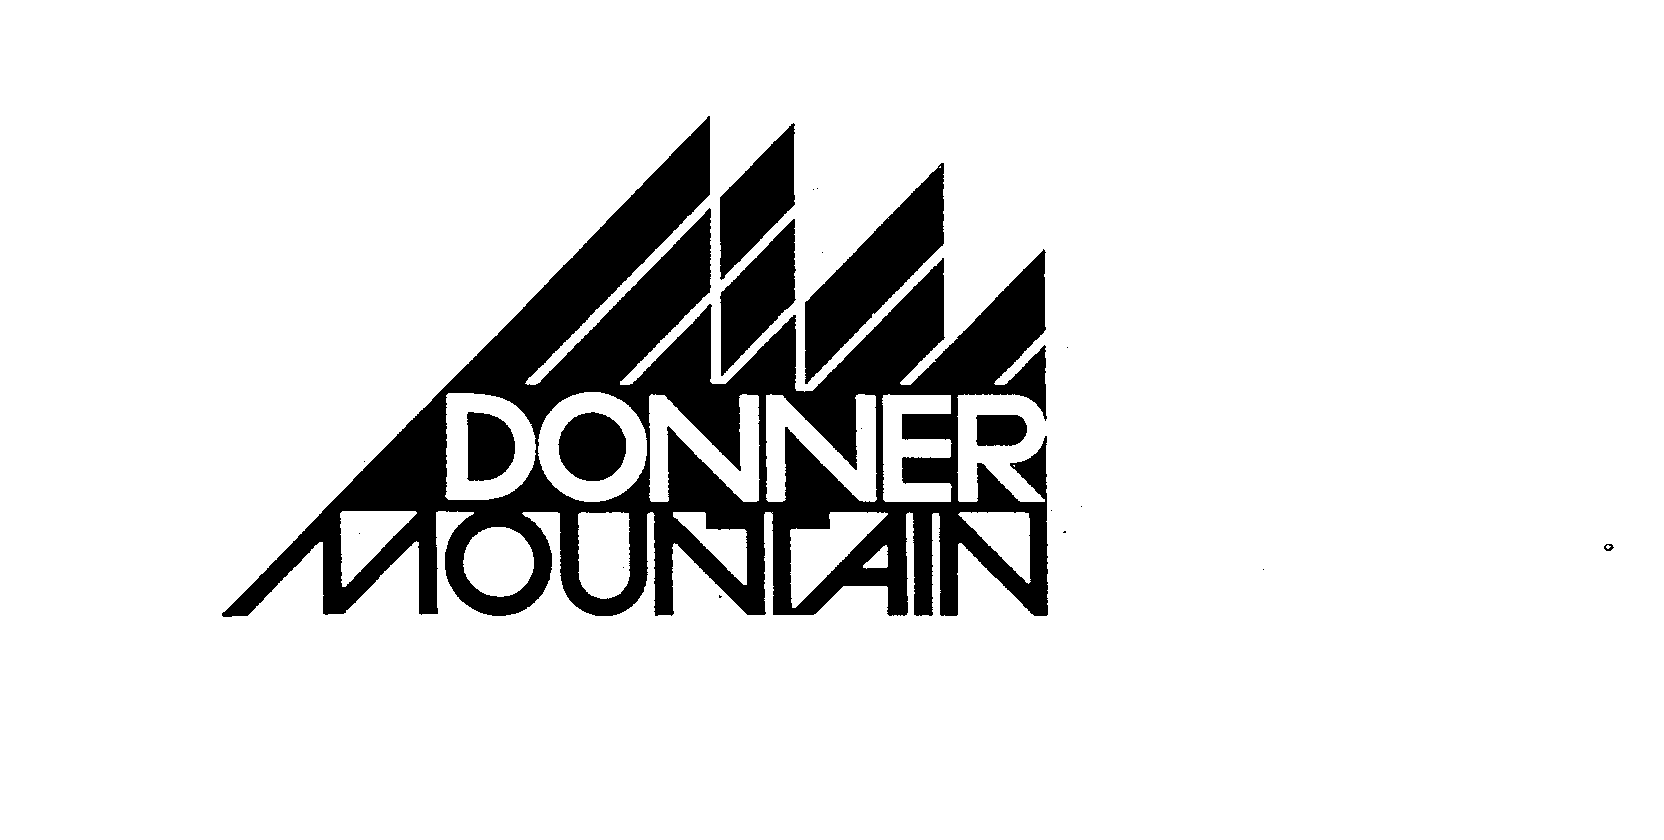 DONNER MOUNTAIN